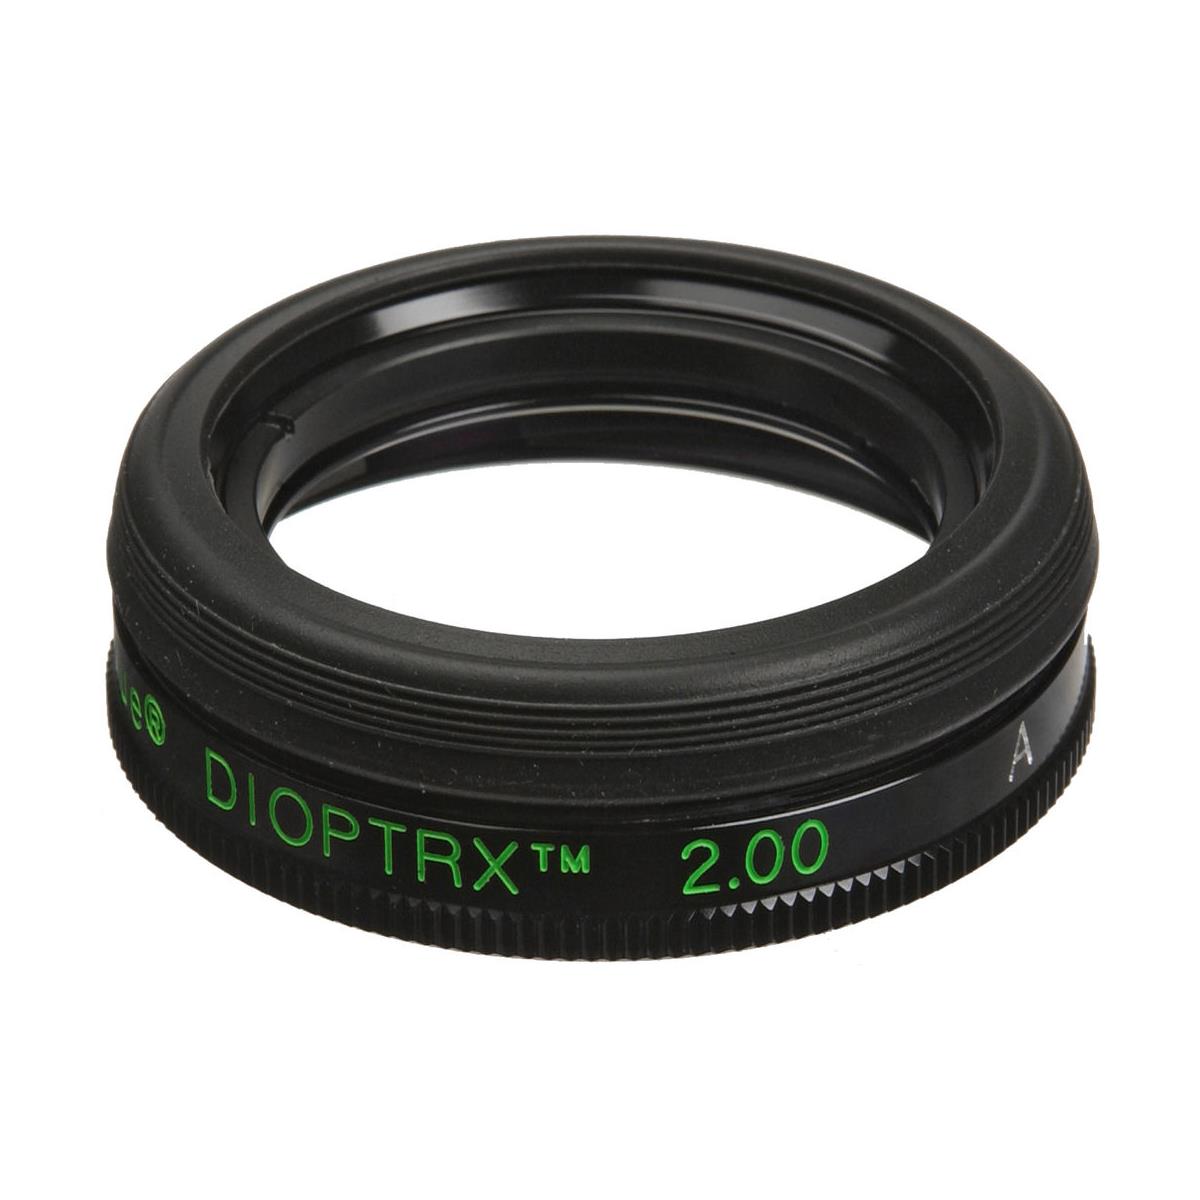 Image of Tele Vue Dioptrx Astigmatism Correcting Lens - 2.00